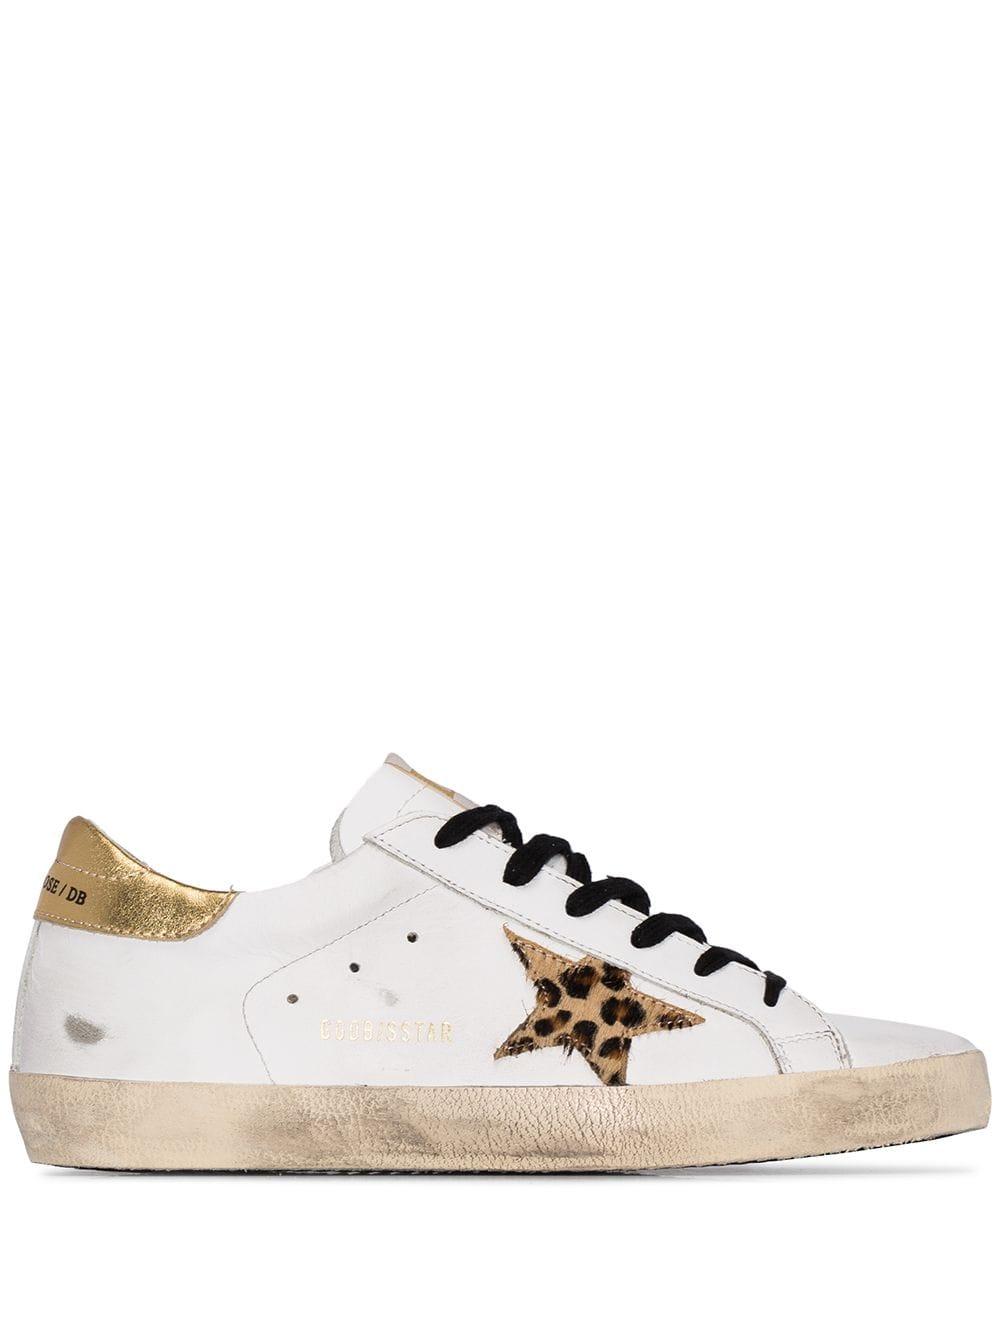 Golden Goose Superstar Leopard-star Sneakers in White | Lyst